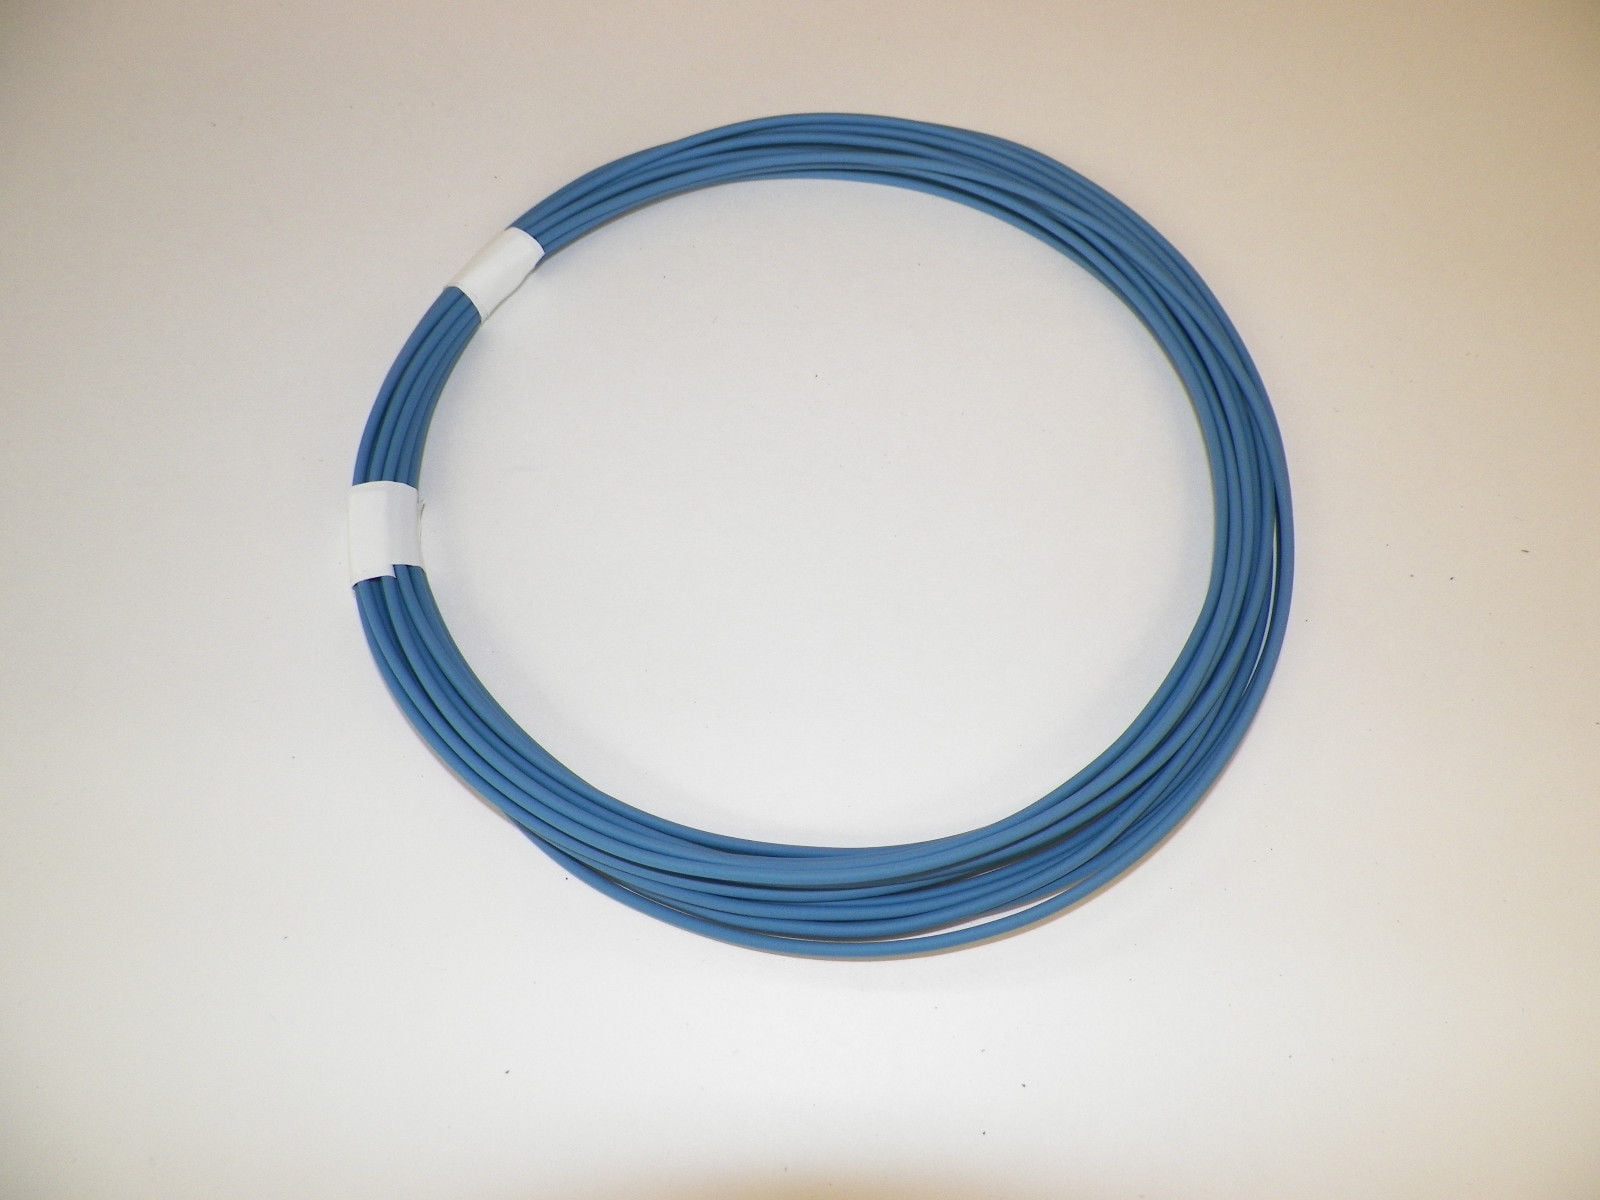 22 Ga 25 feet coil Abrasion-Resistant General Wire TXL light blue